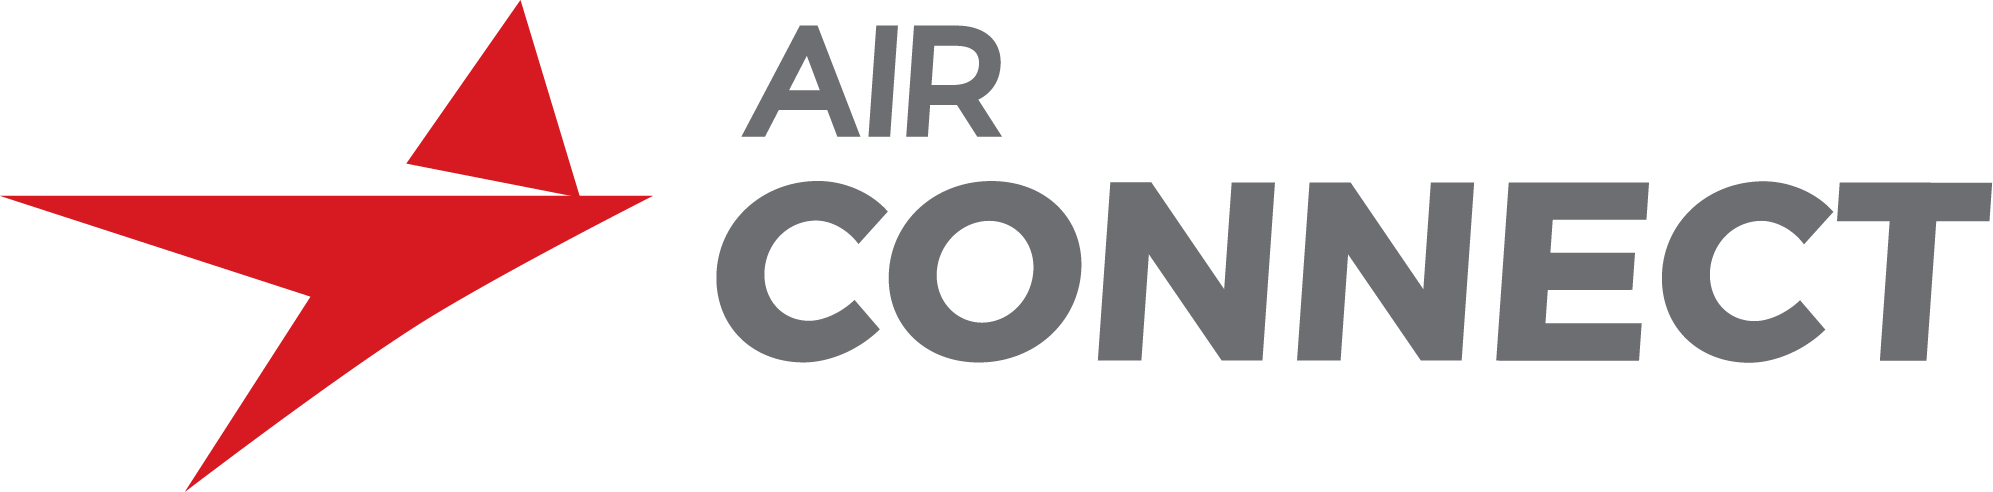 Визз Эйр лого. Sauer Danfoss лого. Wizz Air logo 2022. Connected air